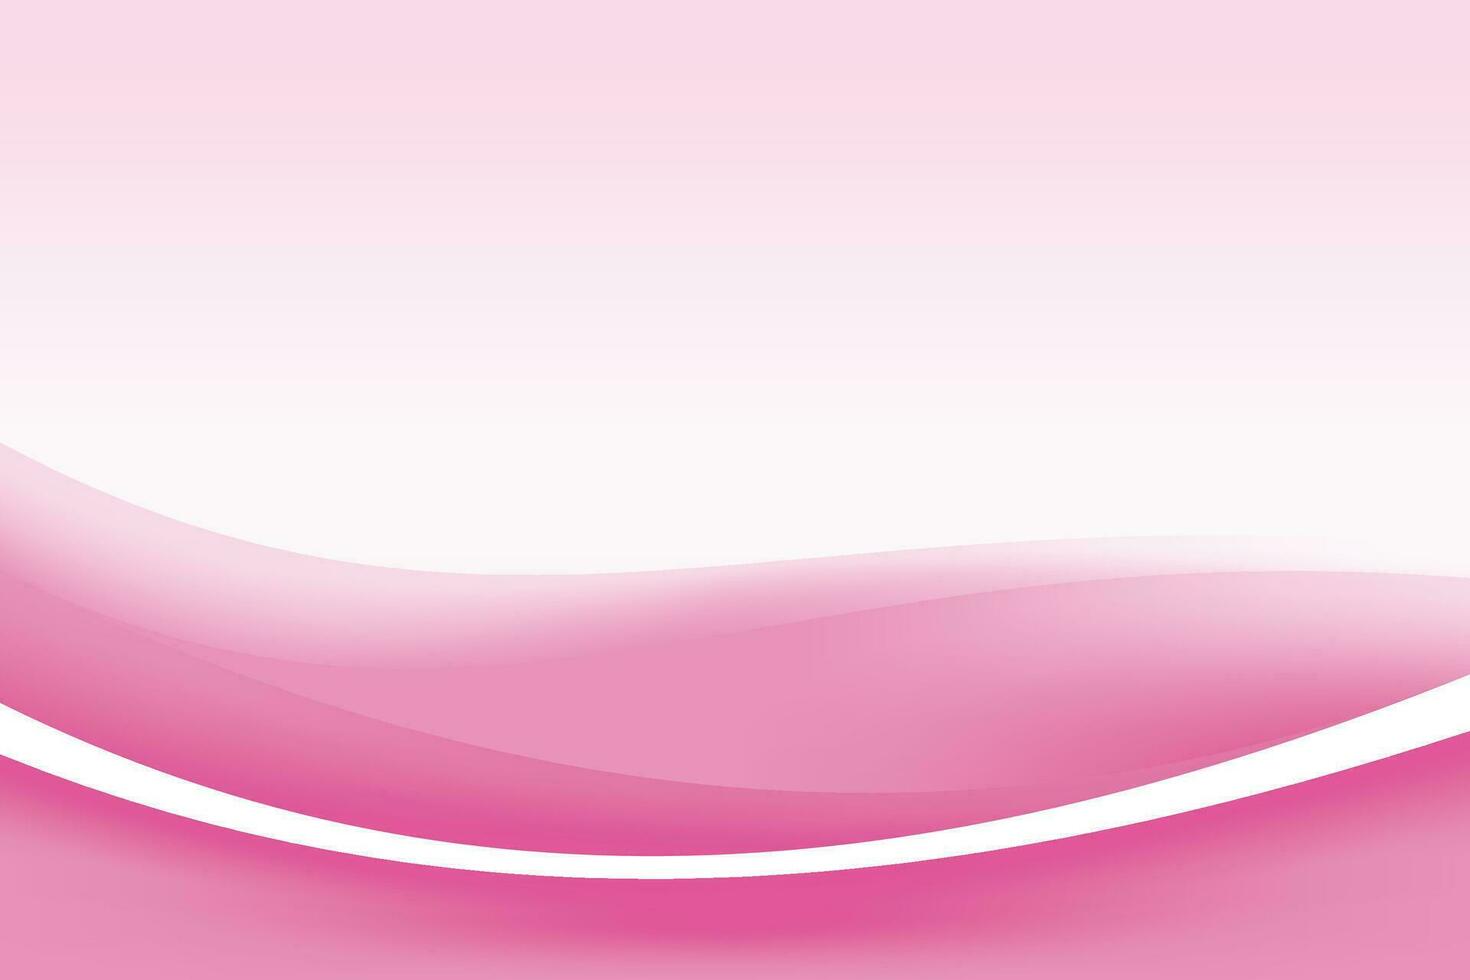 Smooth Pink Wavy Background Design vector